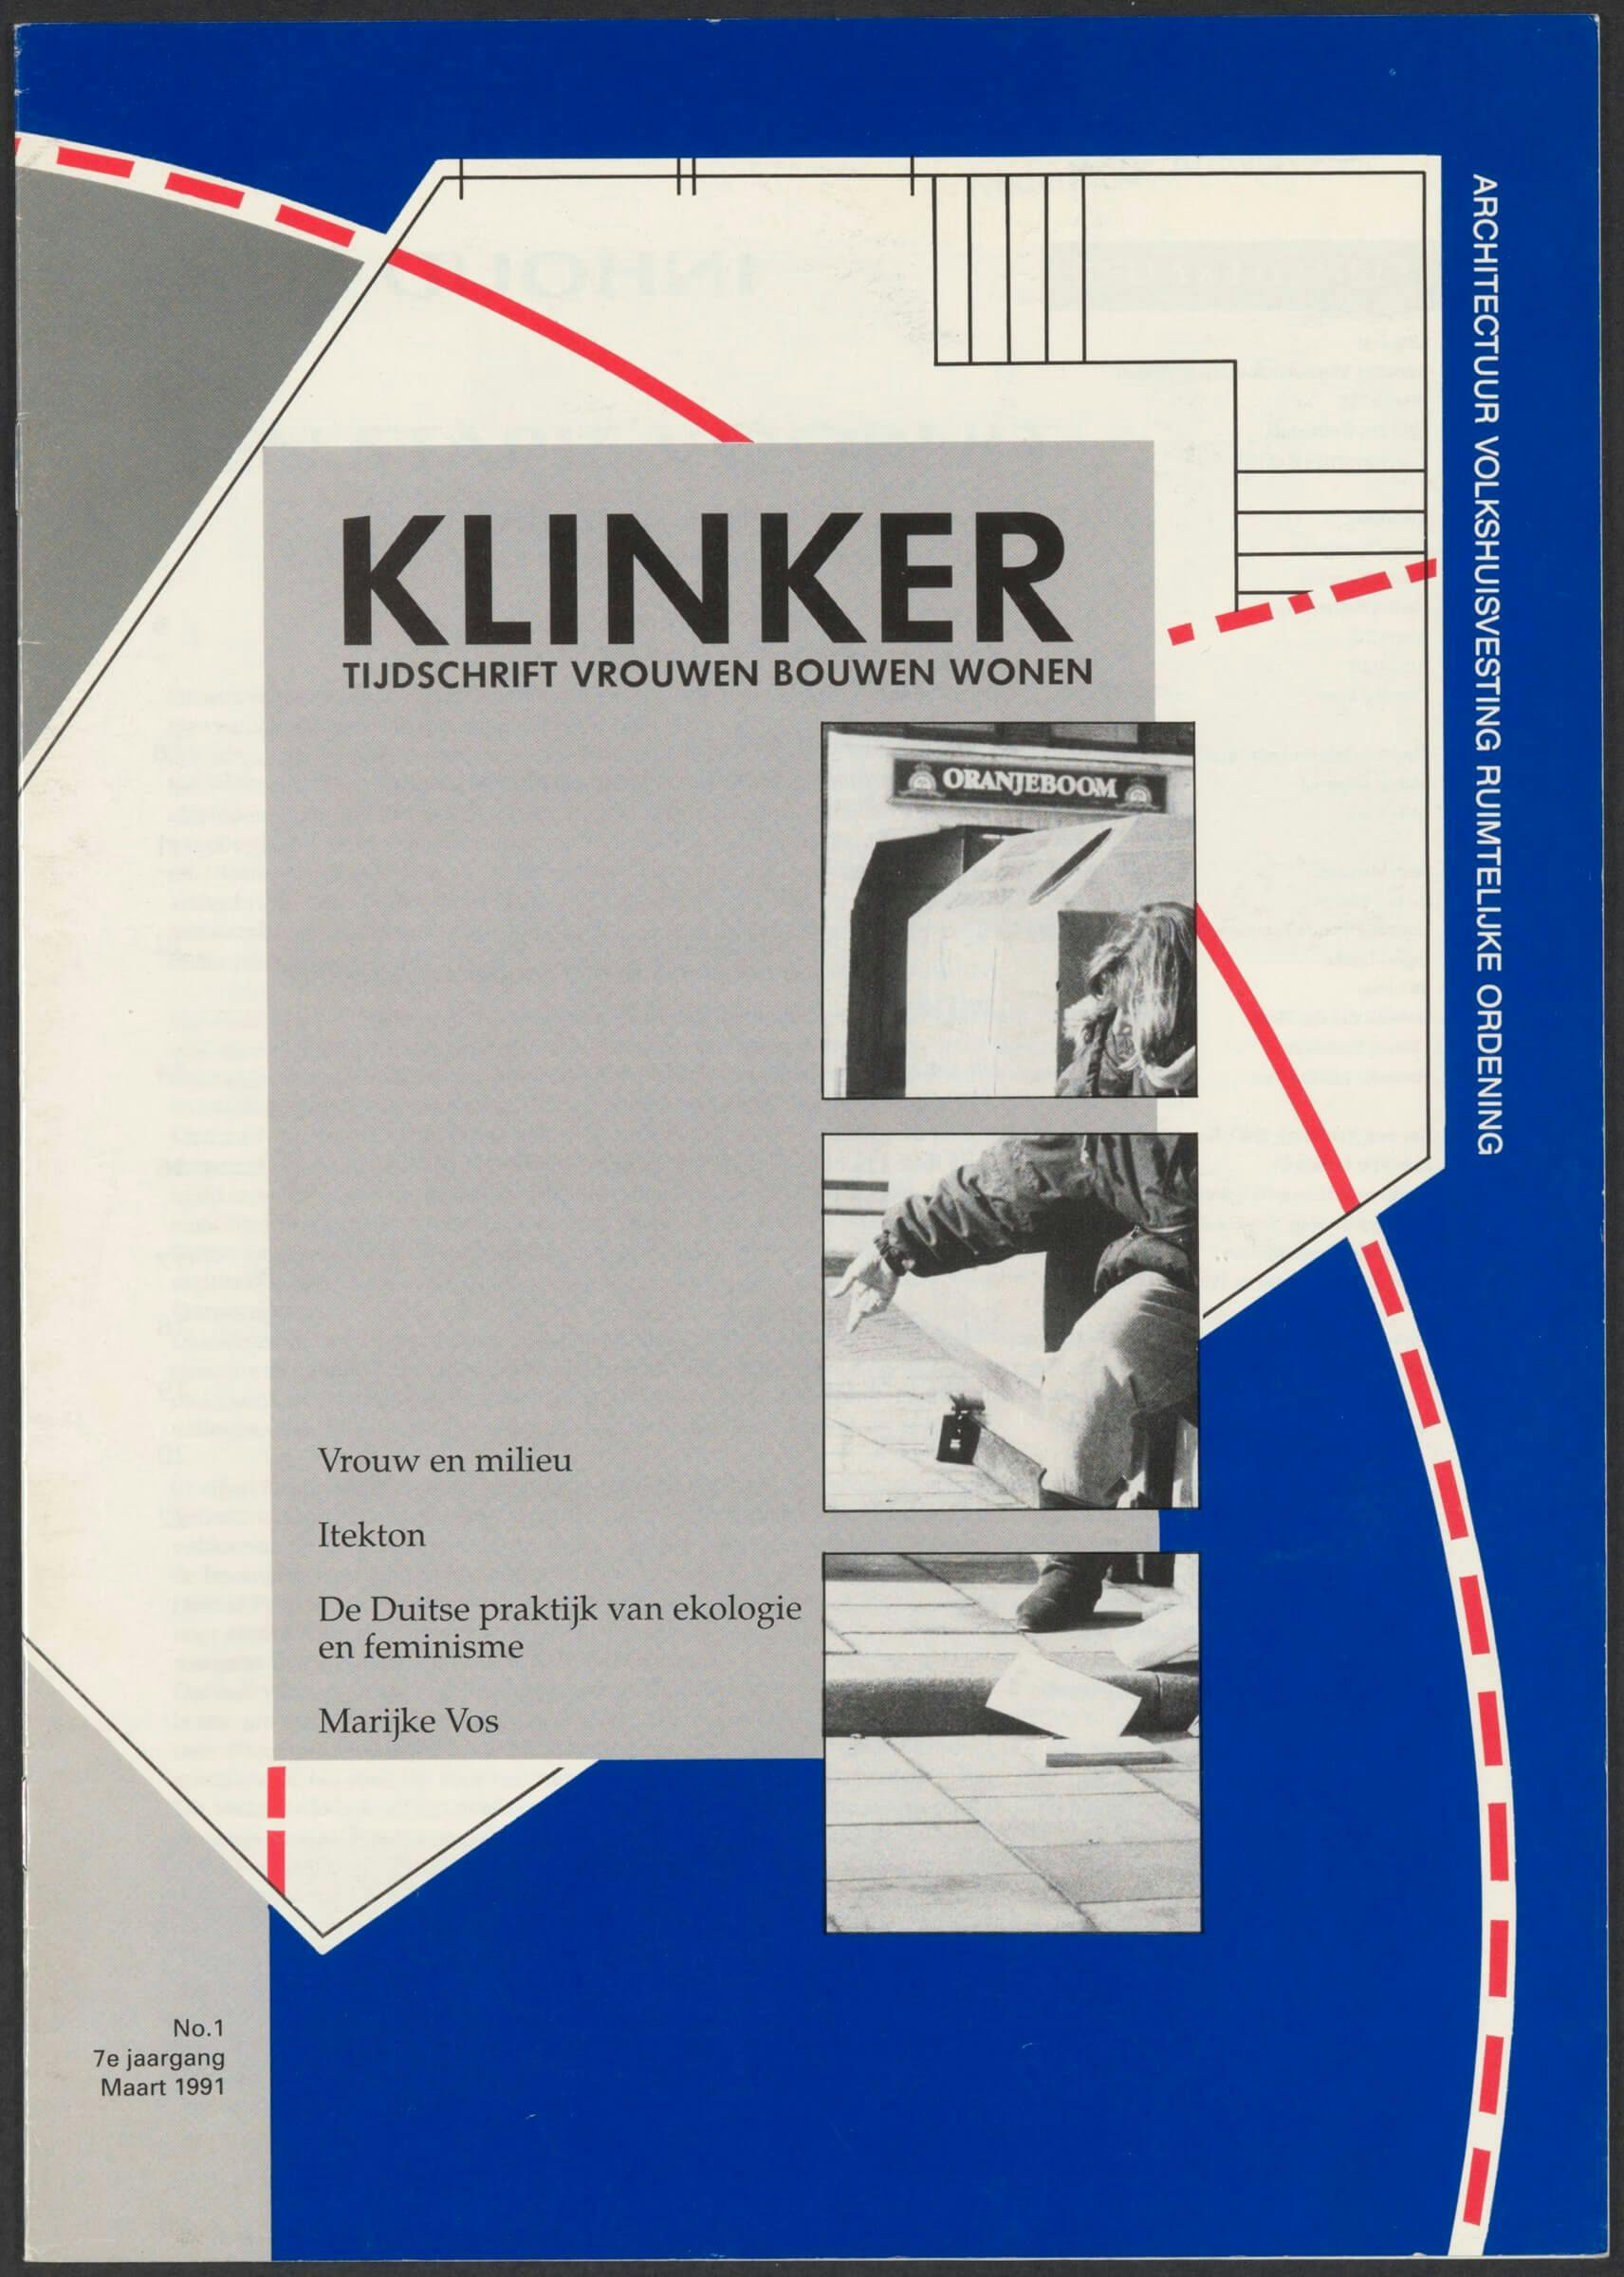 Klinker, a newspaper edited by Vrouwen Bouwen Wonen. March 1991. Collection Het Nieuwe Instituut. 